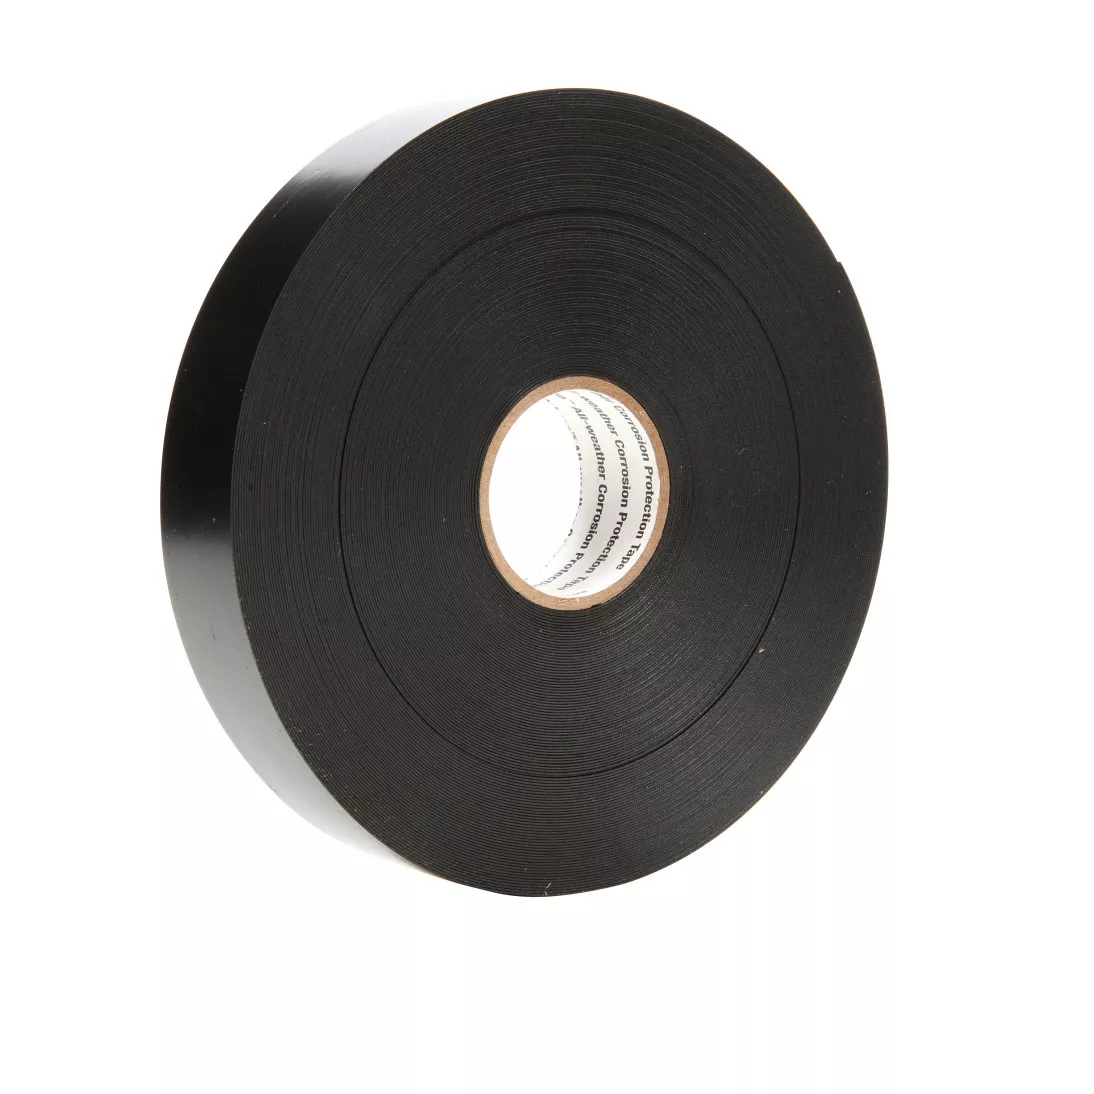 3M™ Scotchrap™ Vinyl Corrosion Protection Tape 51, 1 in x 100 ft,
Unprinted, Black, 24 rolls/Case